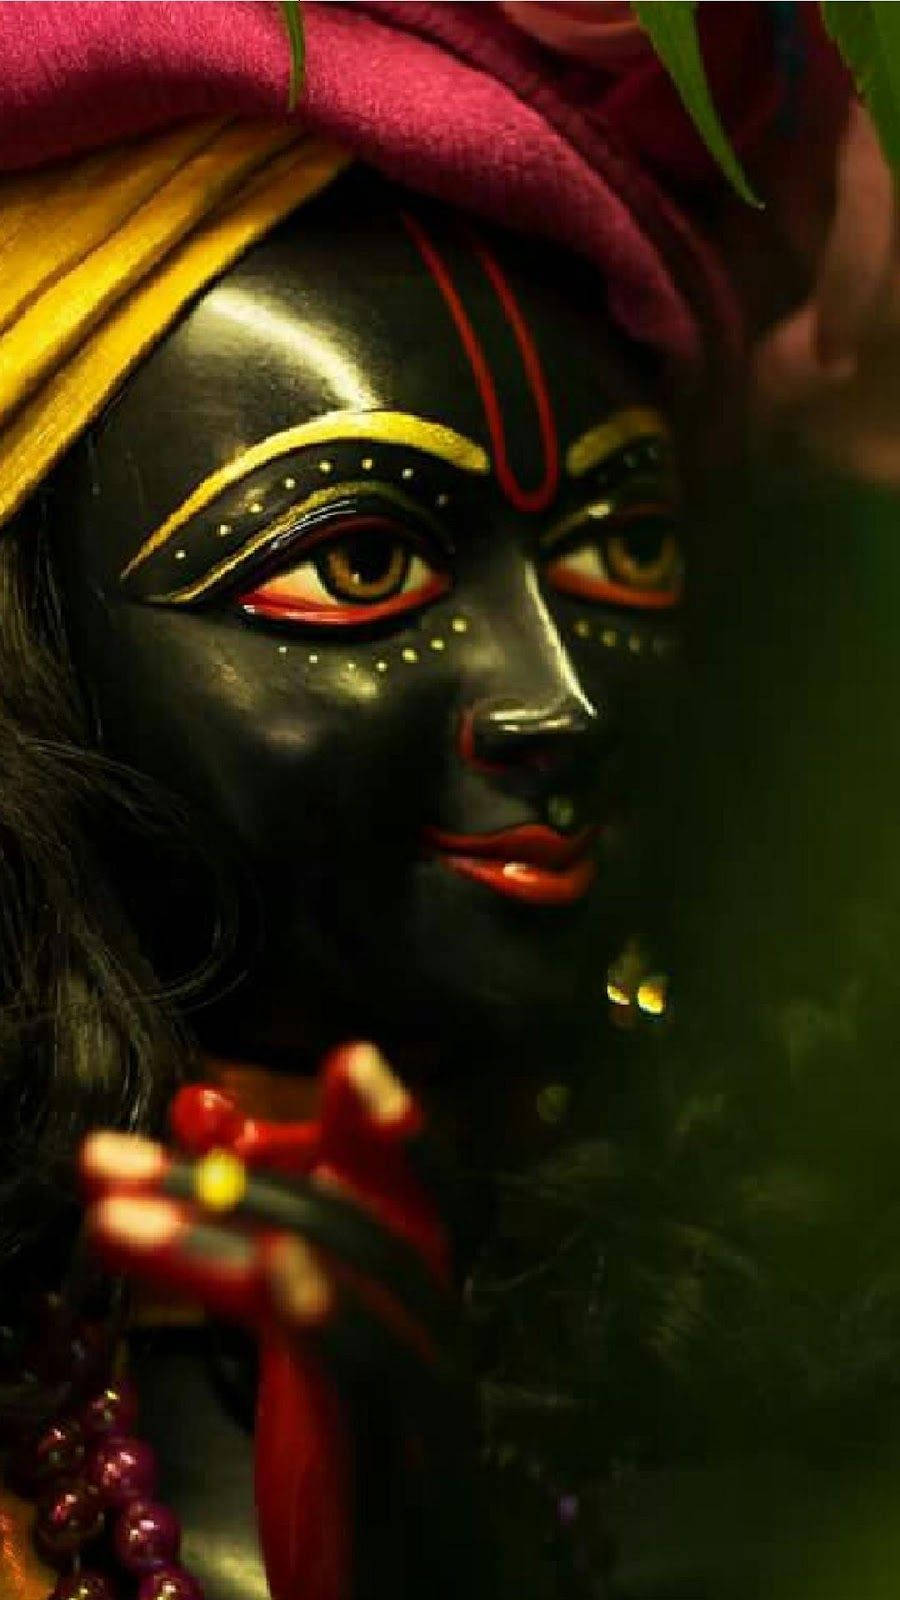 Majestic Black Krishna Statue Taken With Phone Camera Wallpaper